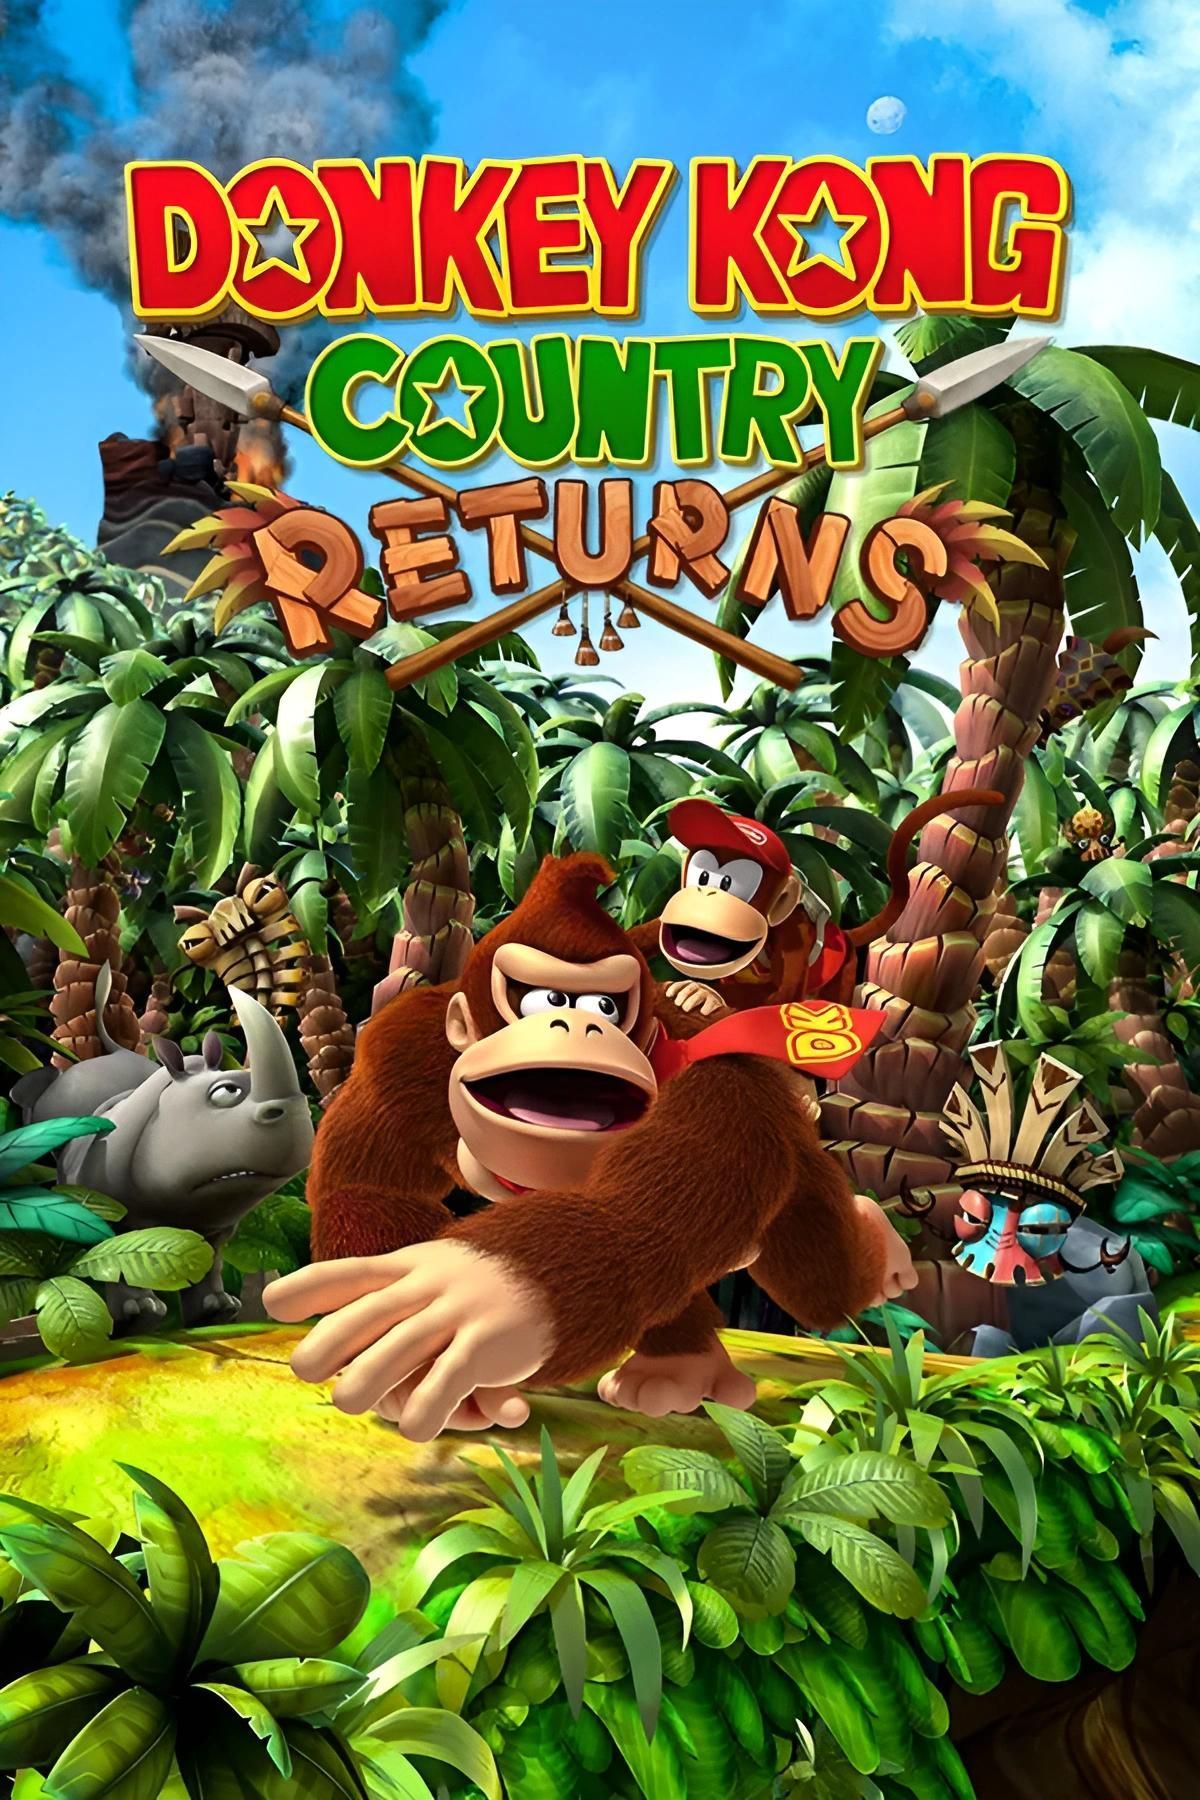 Donkey Kong Country retorna